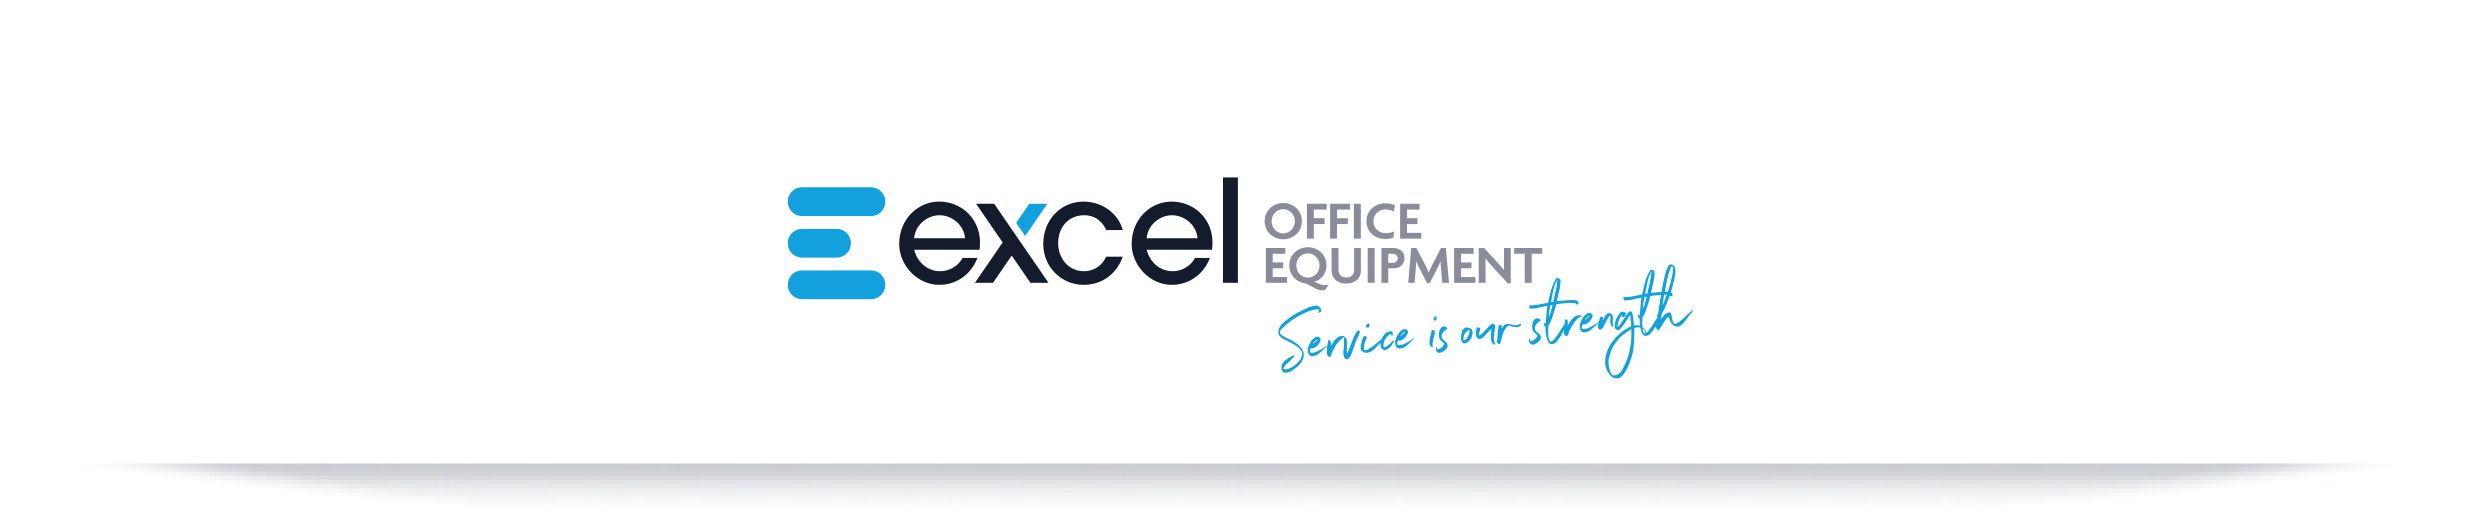 Excel Office Equipment